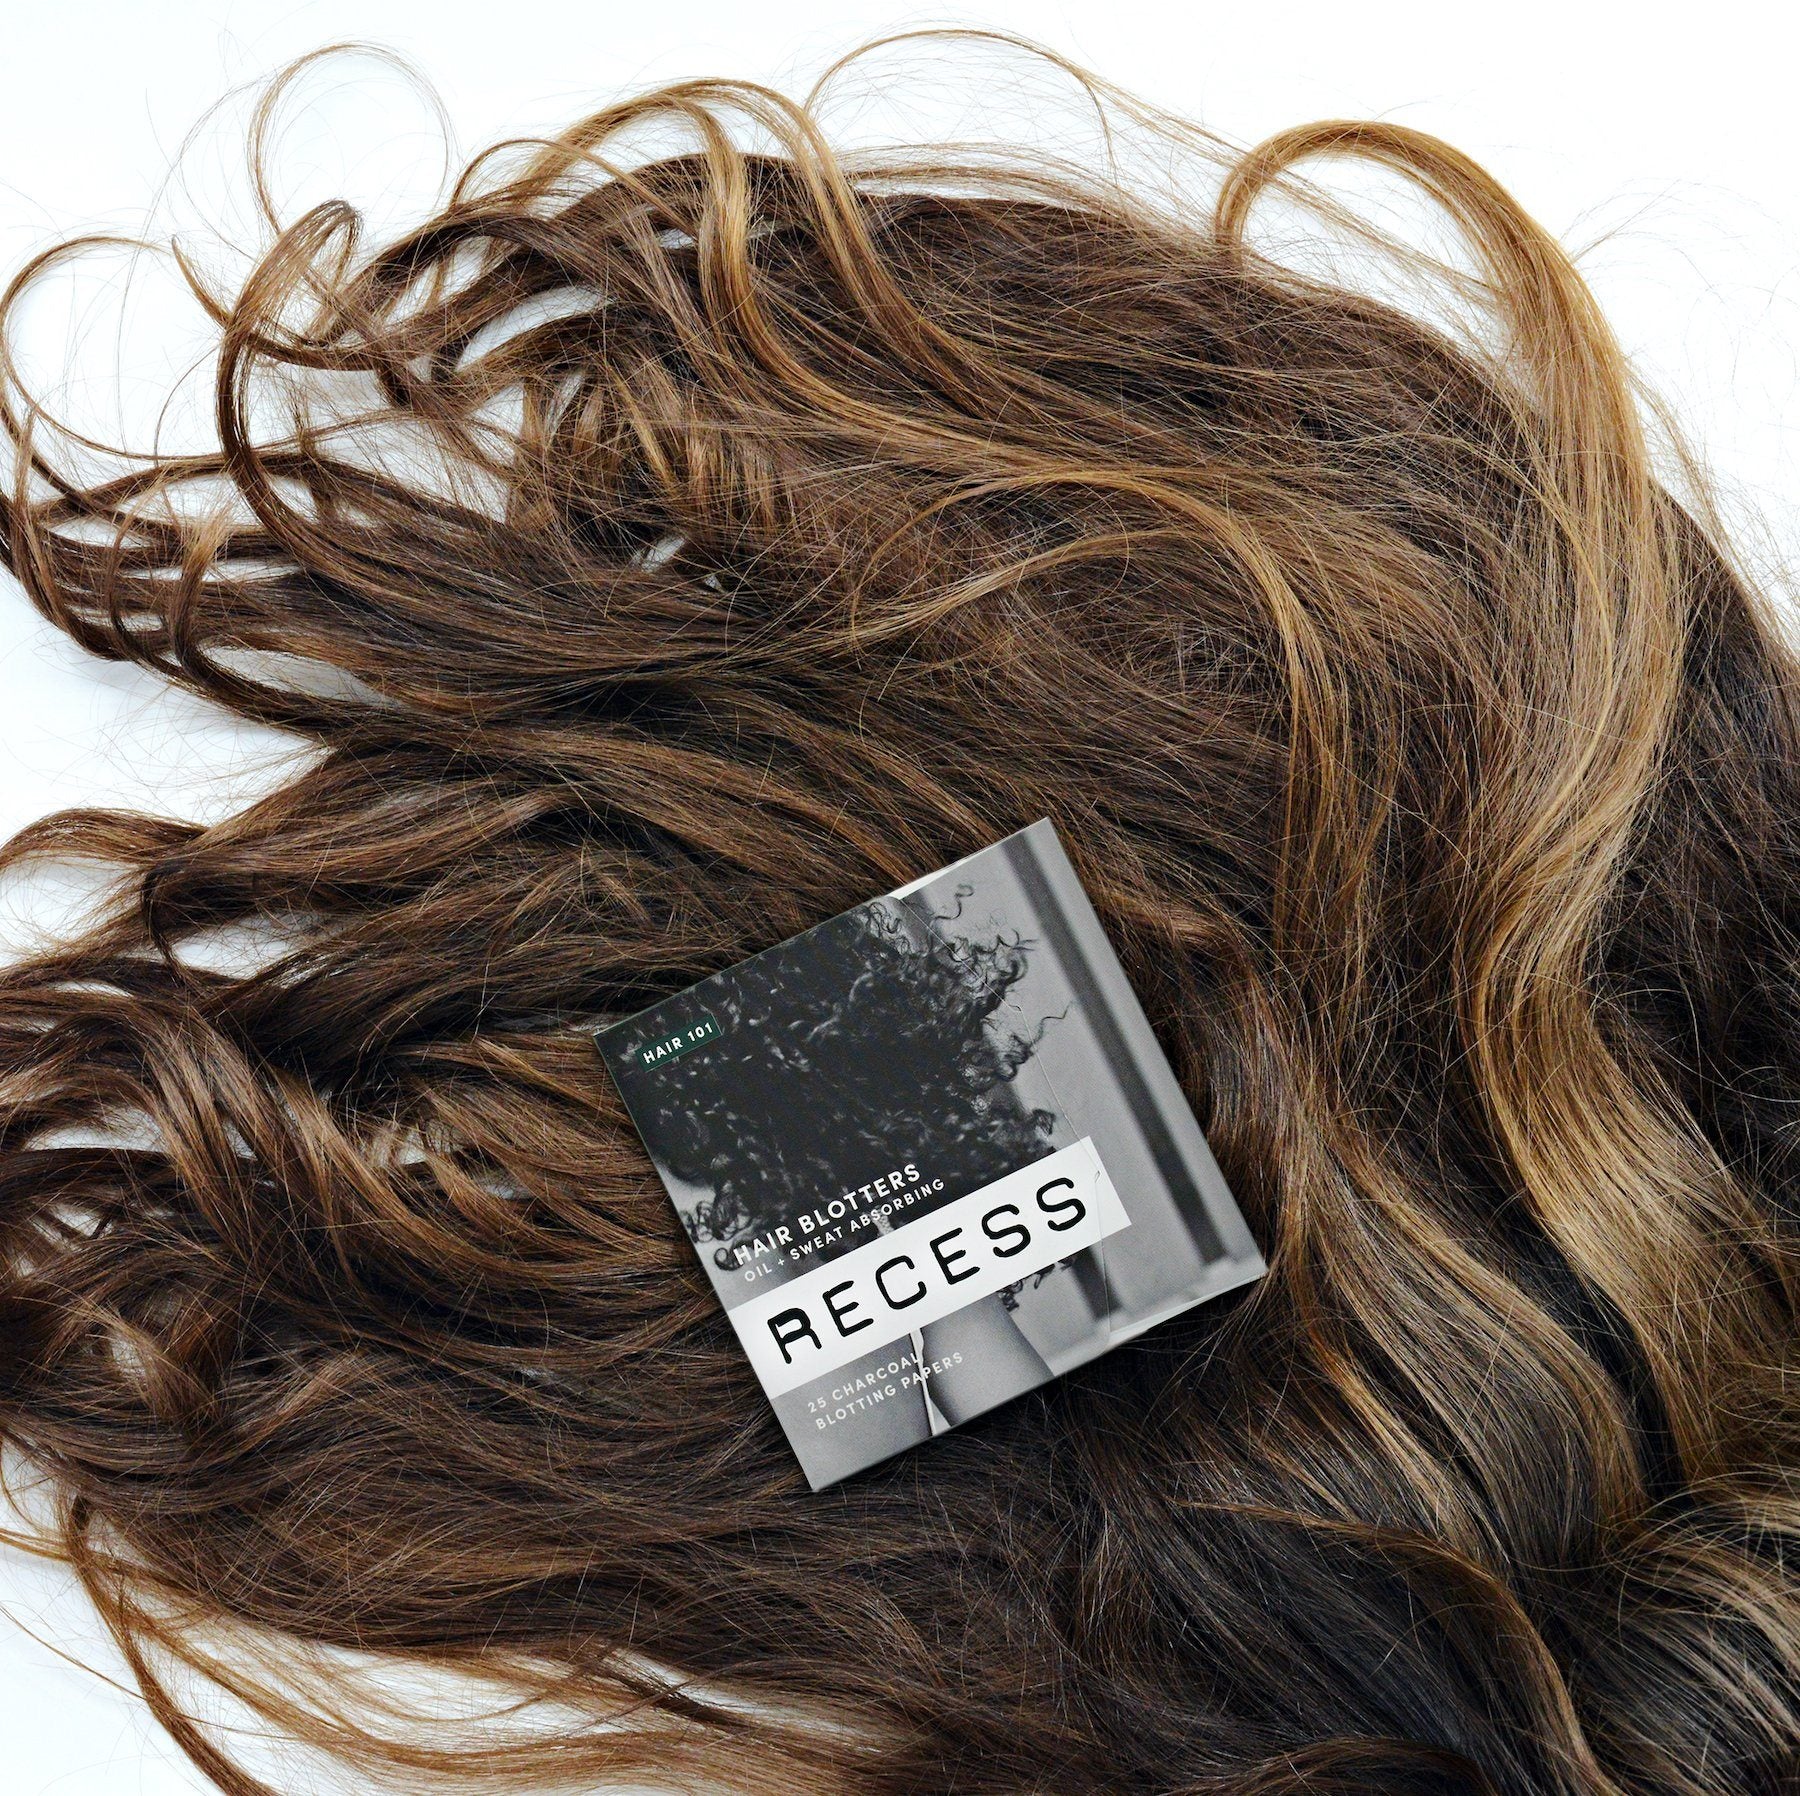 HAIR 101: Hair Blotters (25 blotter papers) (629696692256)